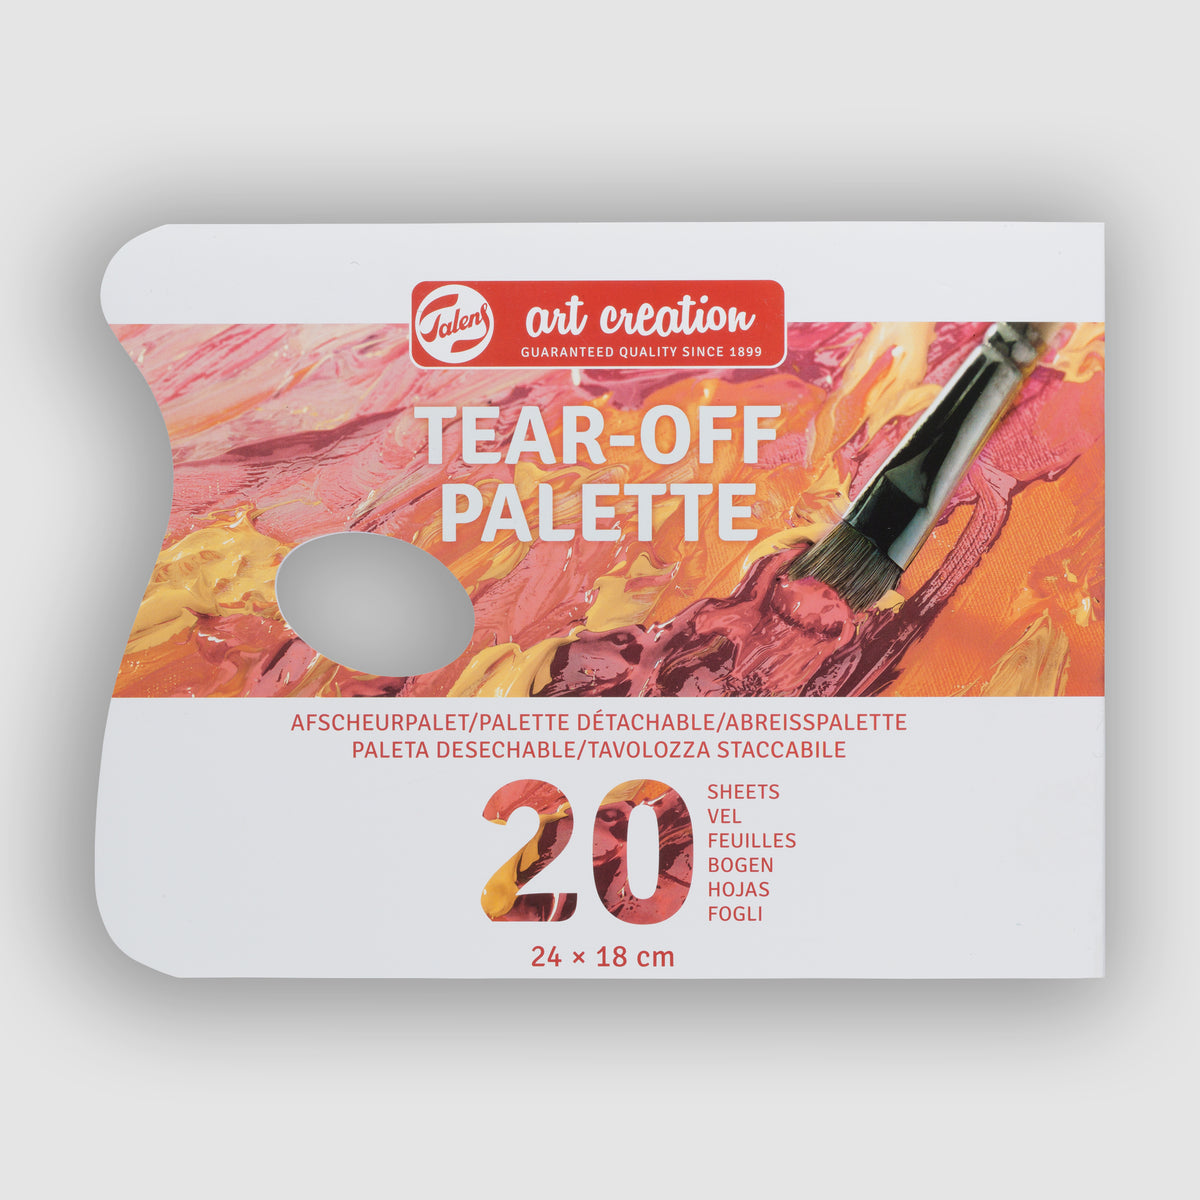 Talens tear-off palette 18x24cm